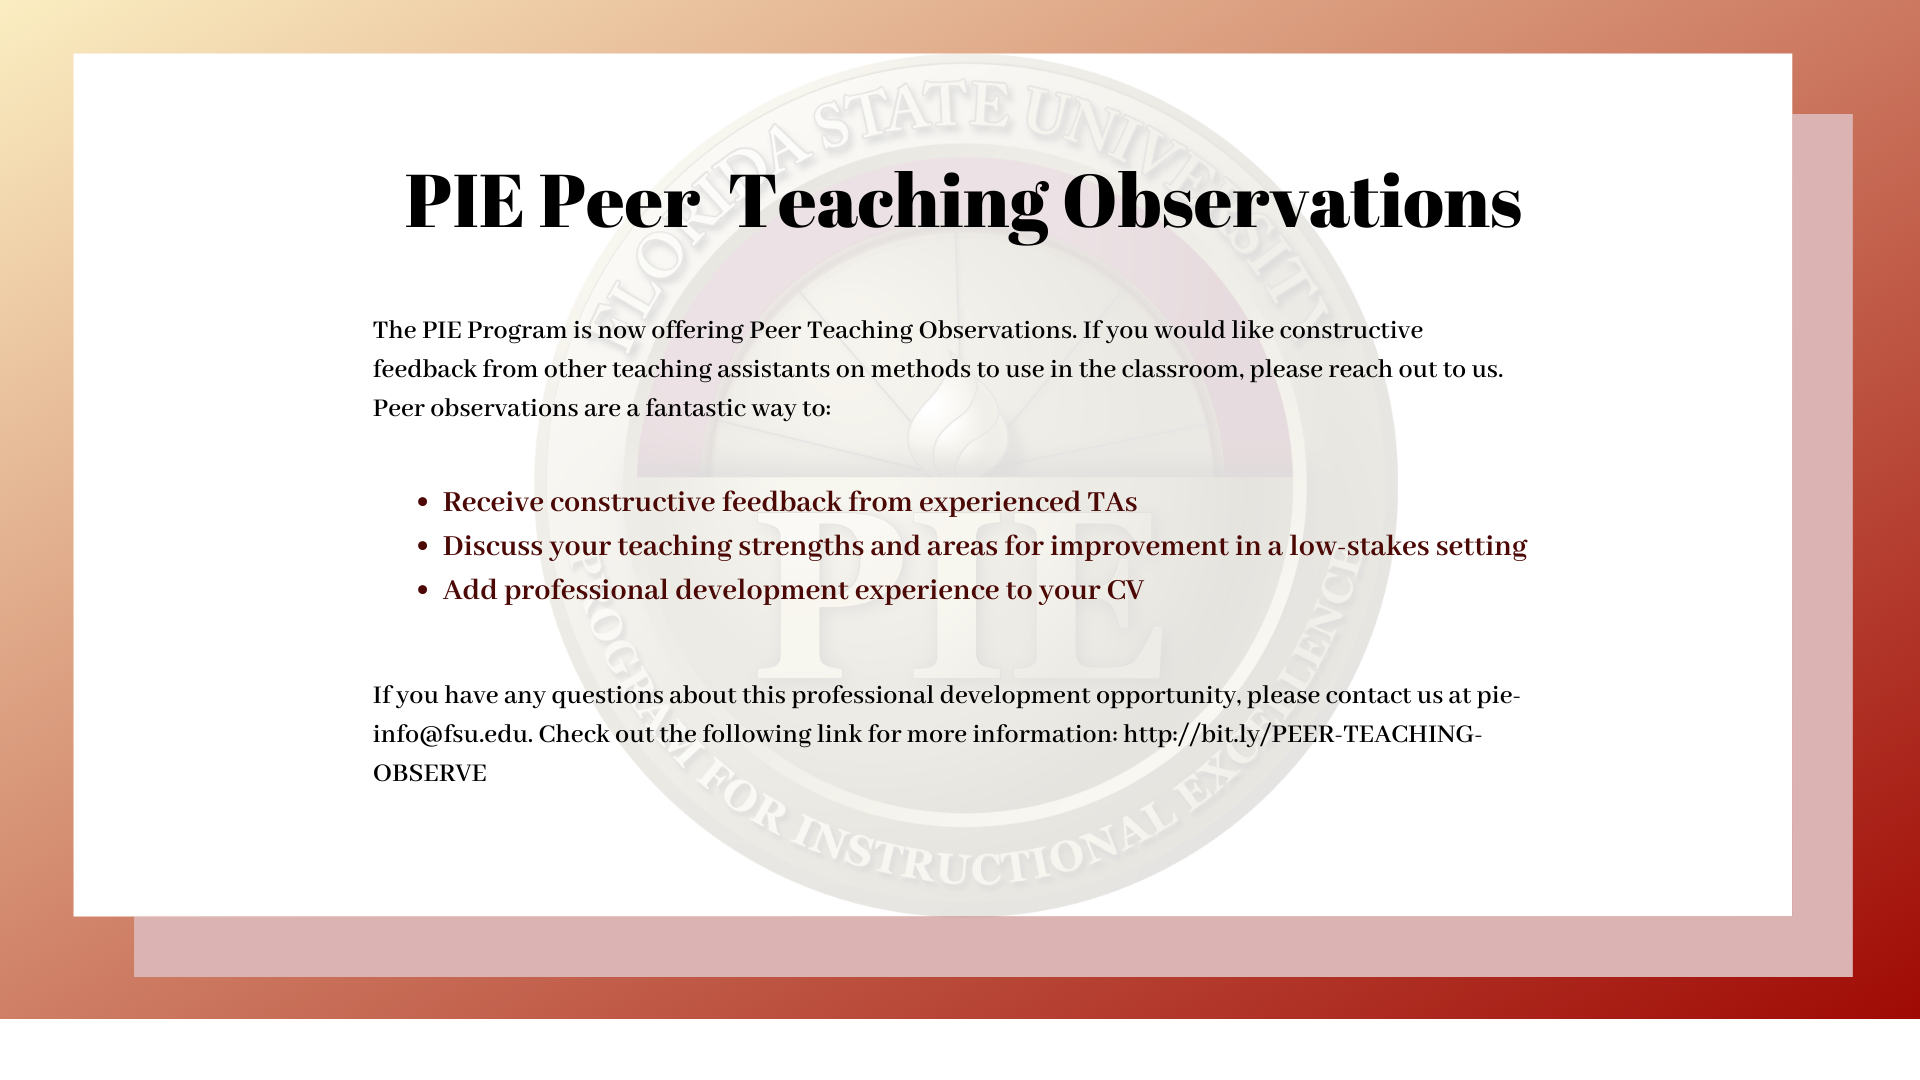 Peer Teaching Observation flyer for the PIE Peer Observation service.